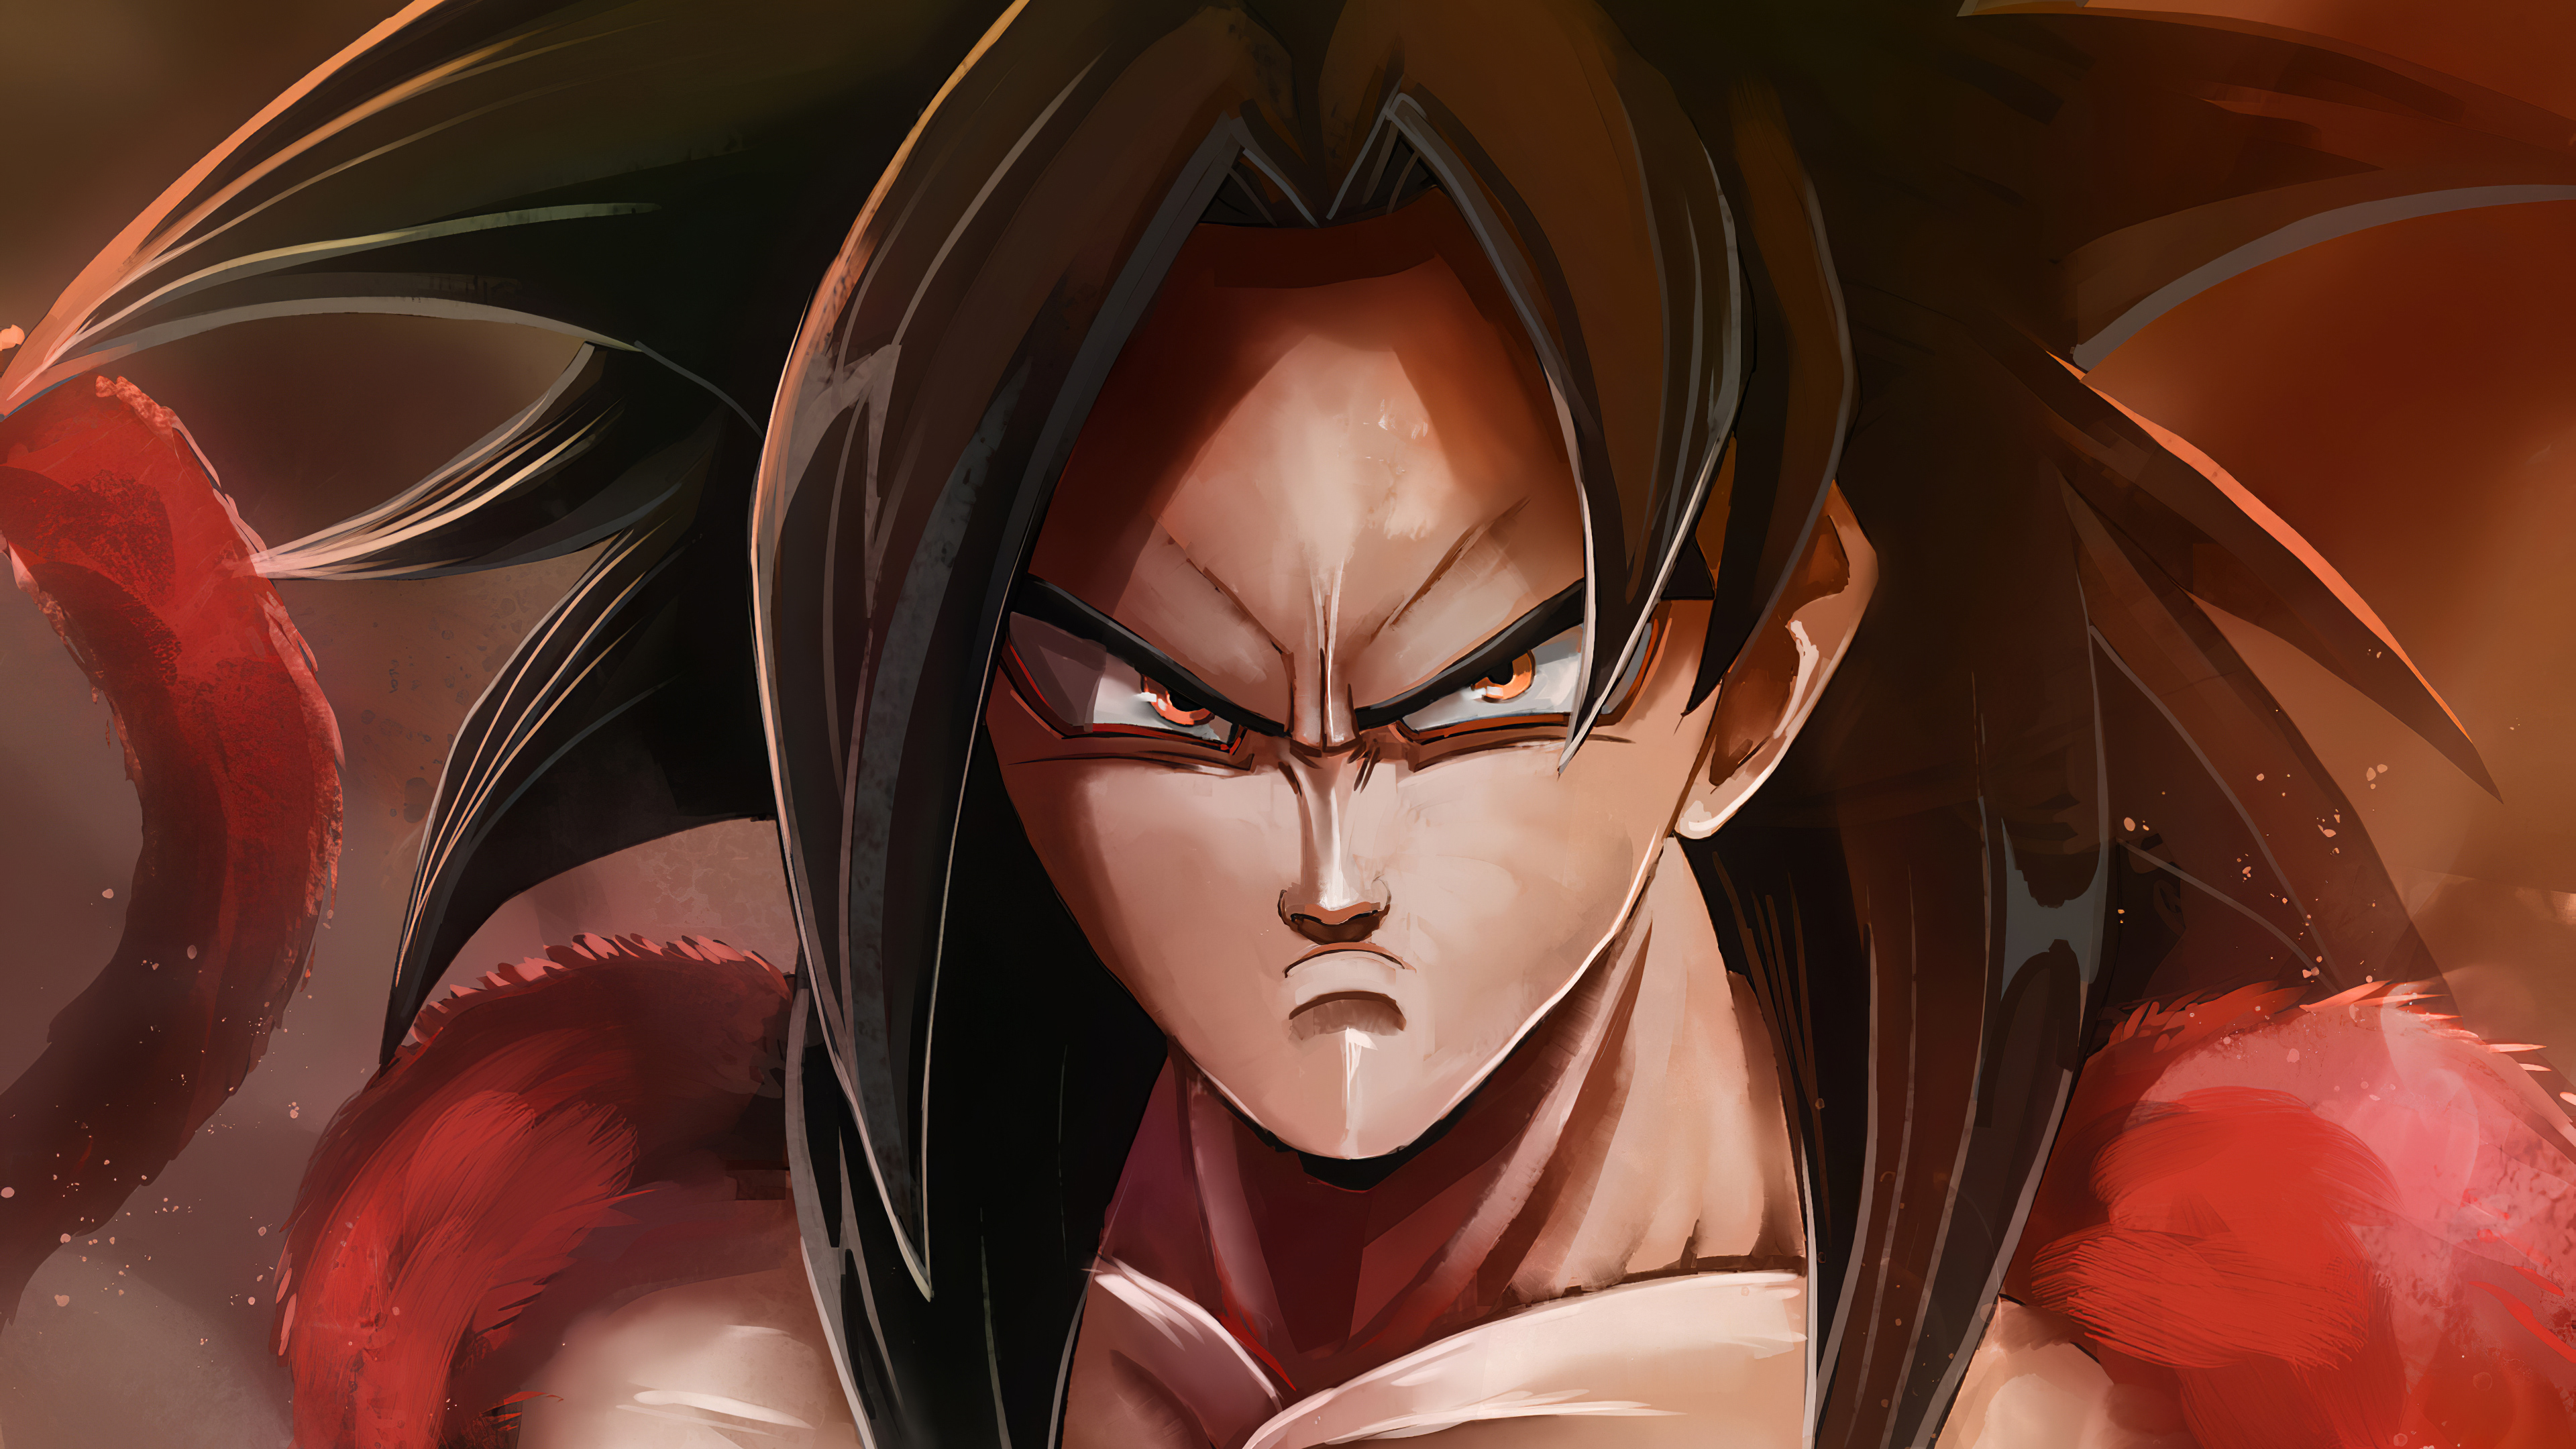 Super Saiyan 4 Goku 4k, HD Anime, 4k Wallpaper, Image, Background, Photo and Picture